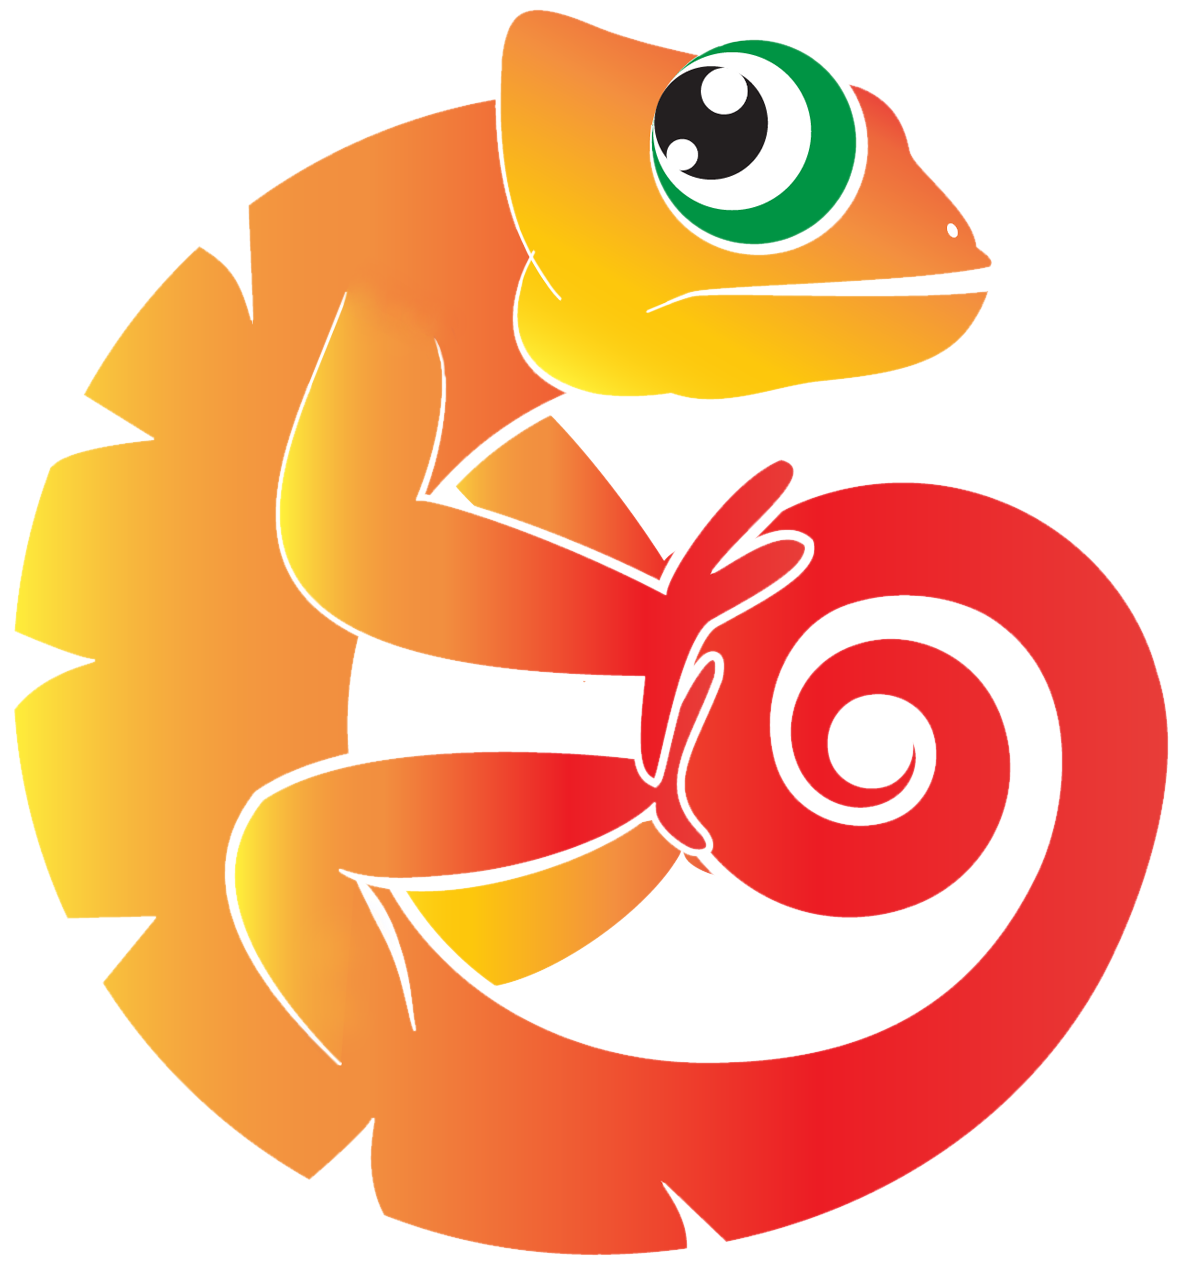 Chameleon Vector PNG Clipart Background